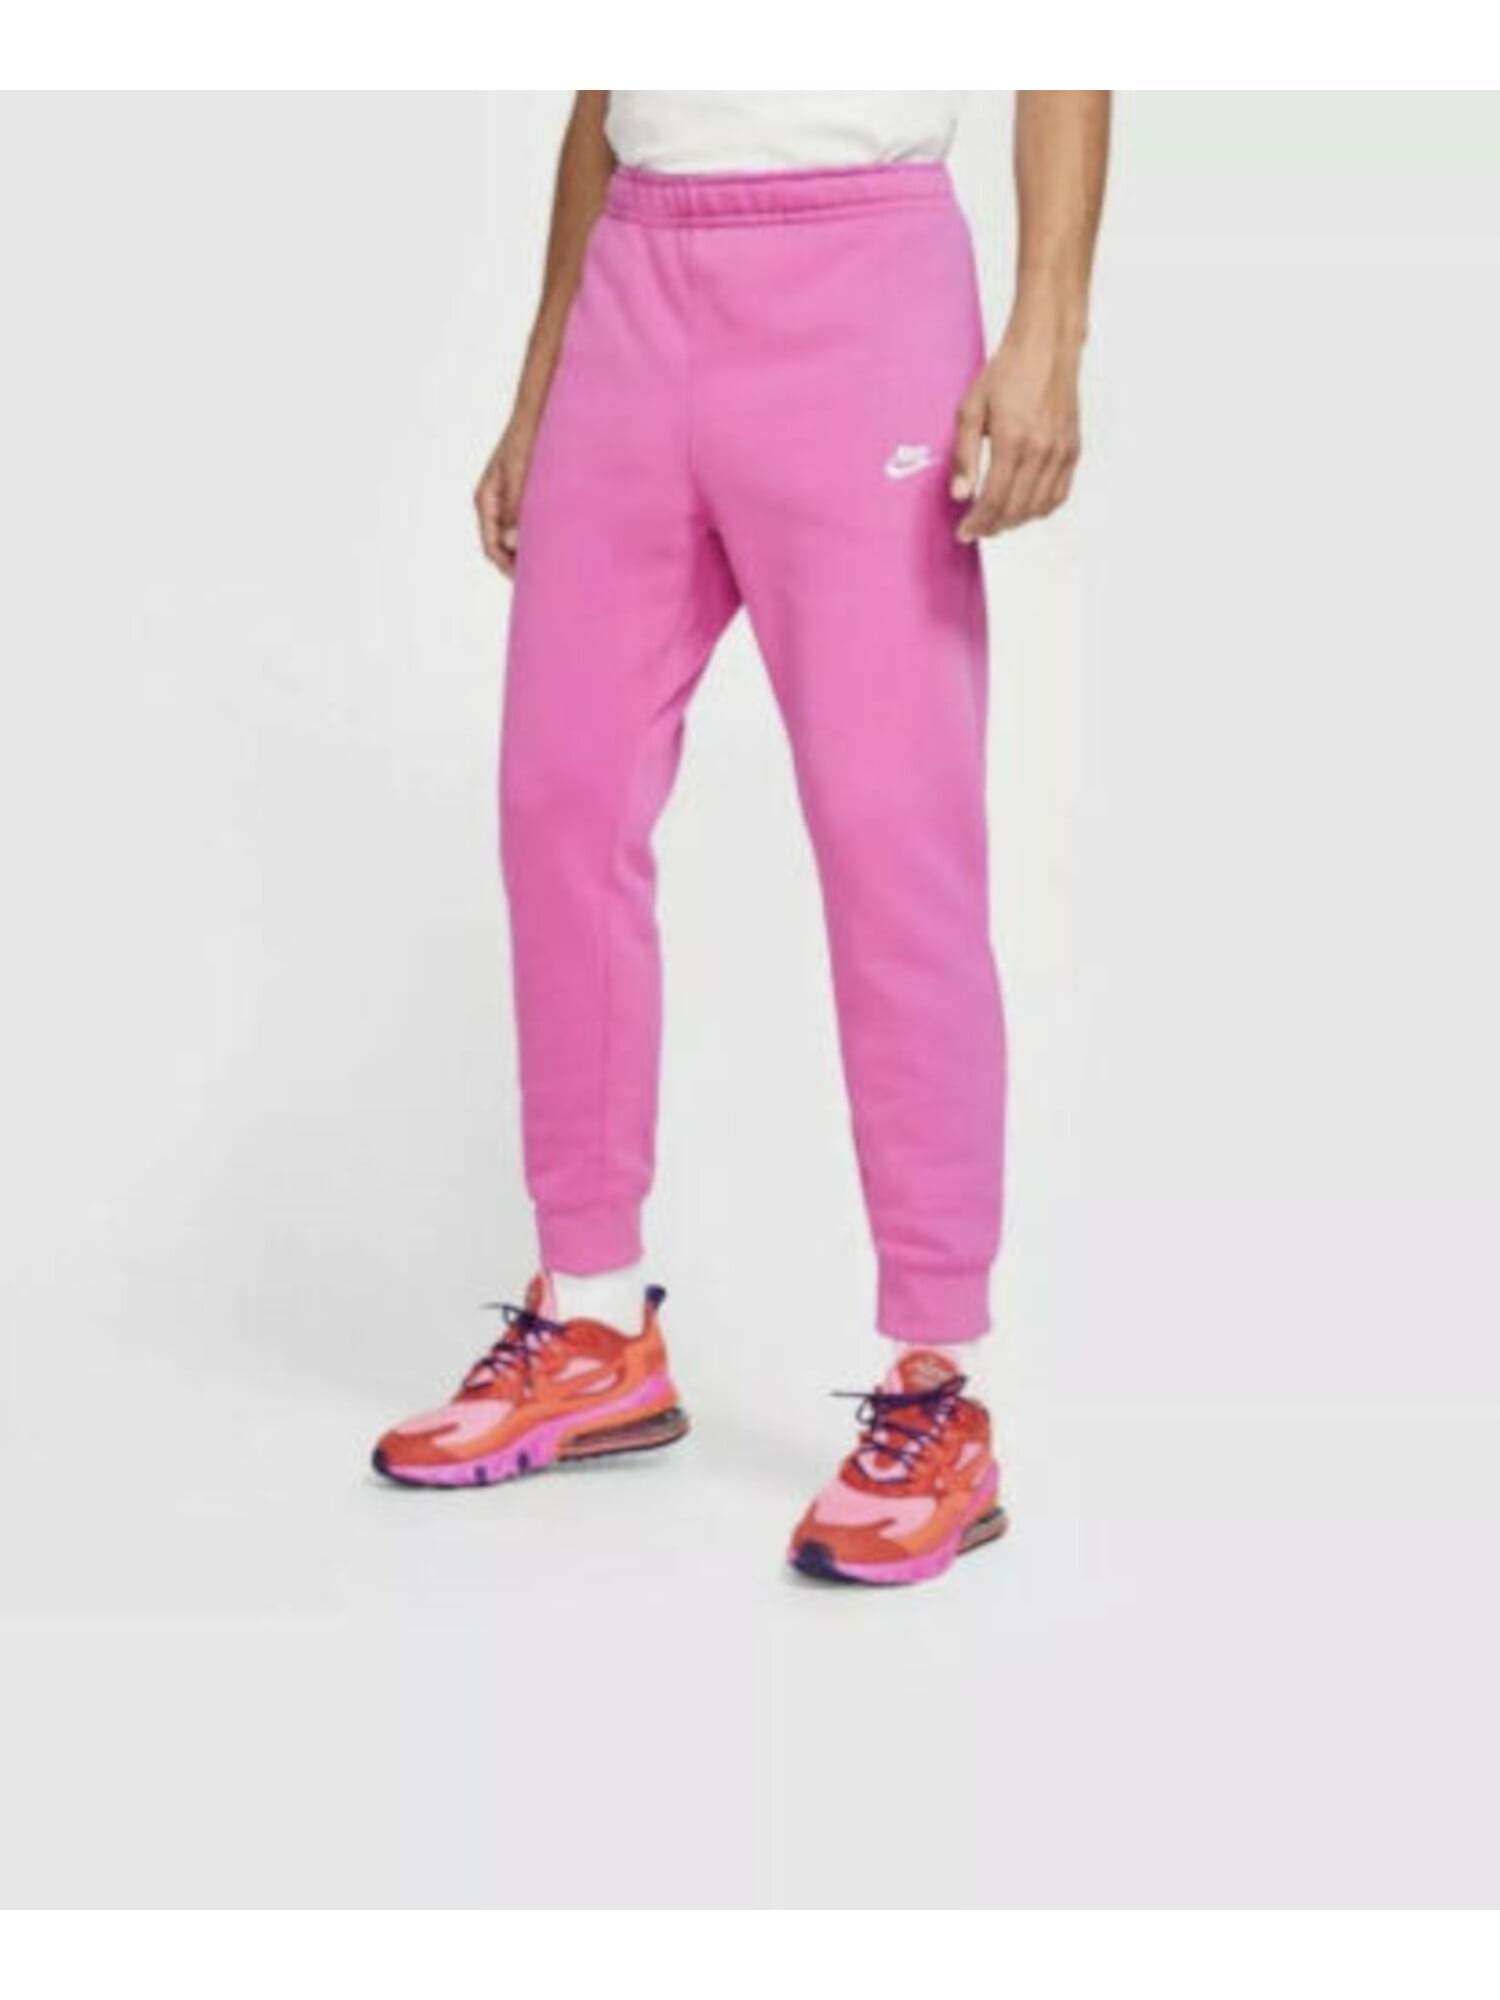 Anestésico Muestra Arrestar NIKE Mens Pink Logo Graphic Sweatpants XXL - Walmart.com